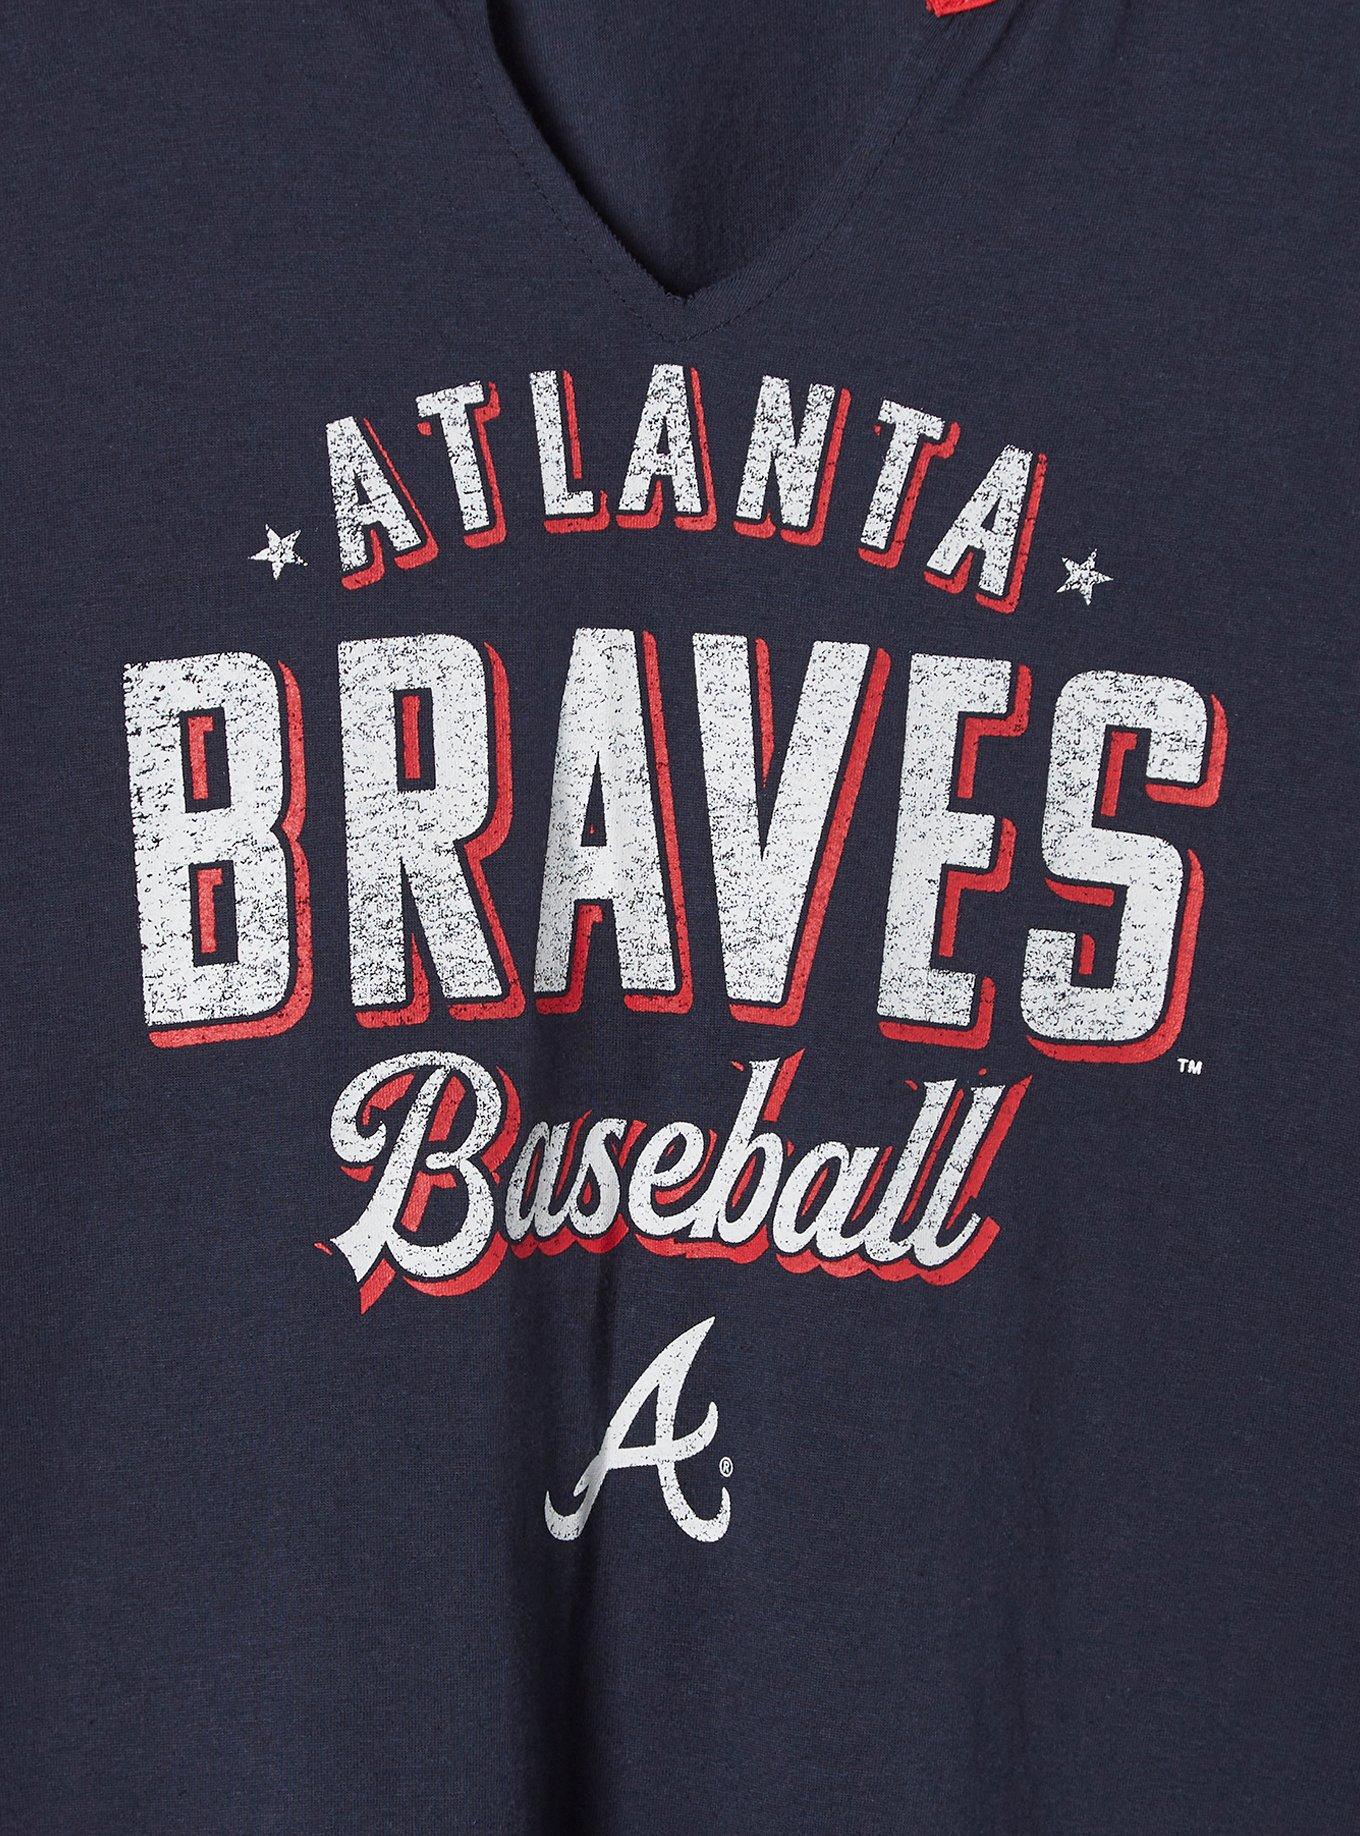 Atlanta Braves baseball cotton fabric 56 by 22 in